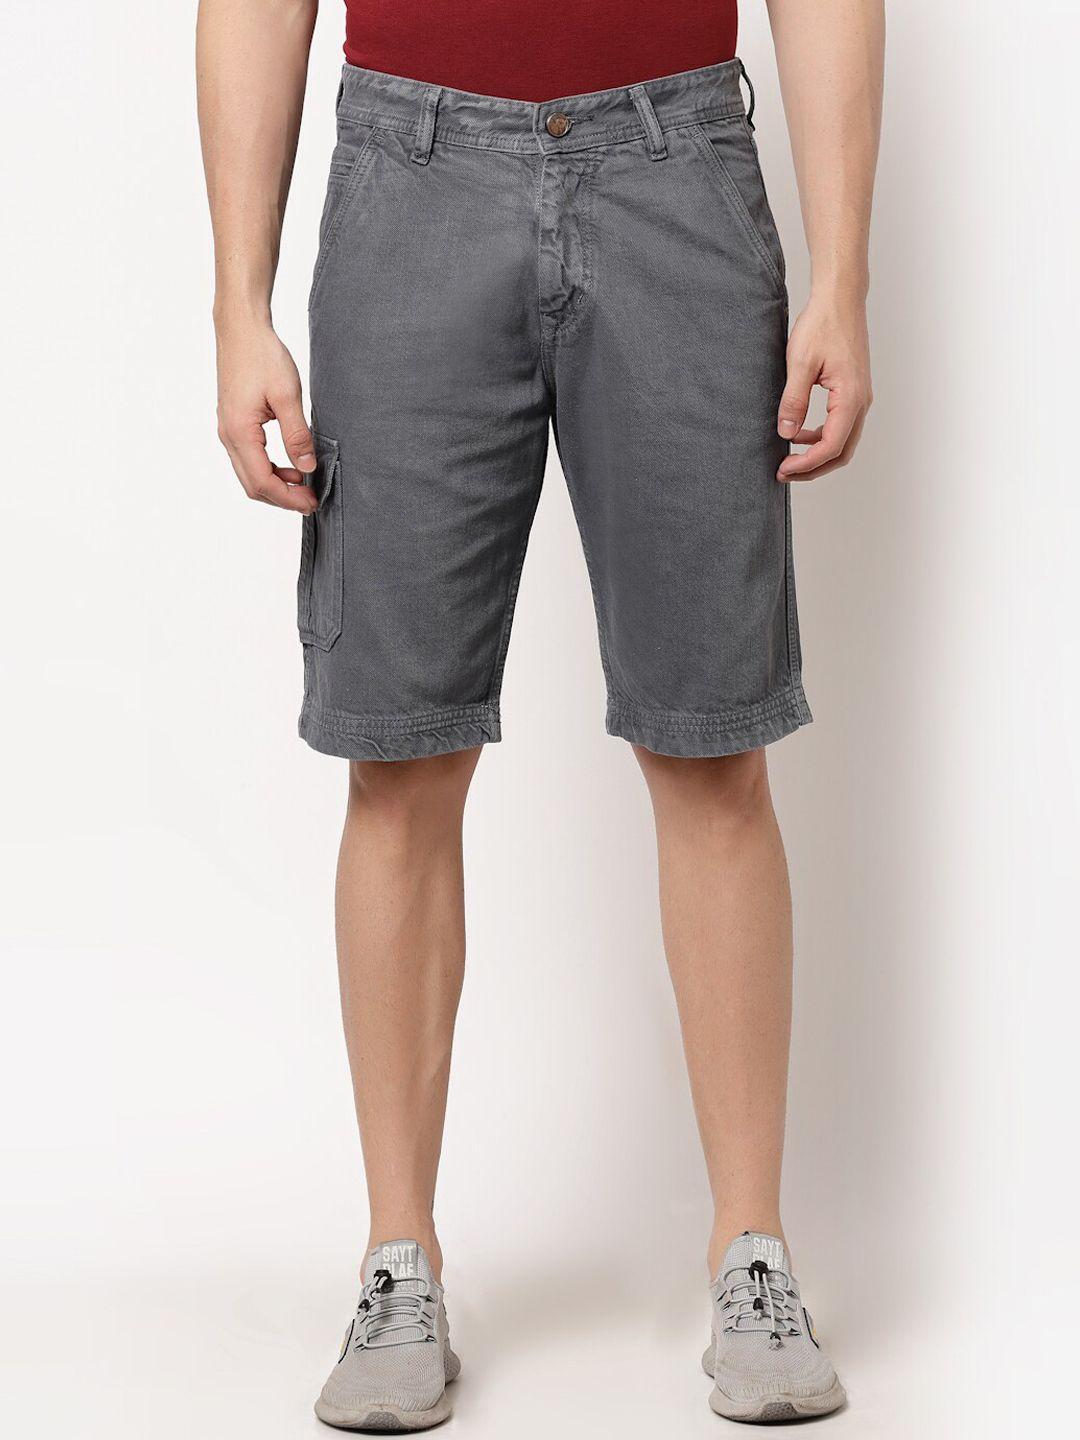 fever men grey denim 100% cotton shorts